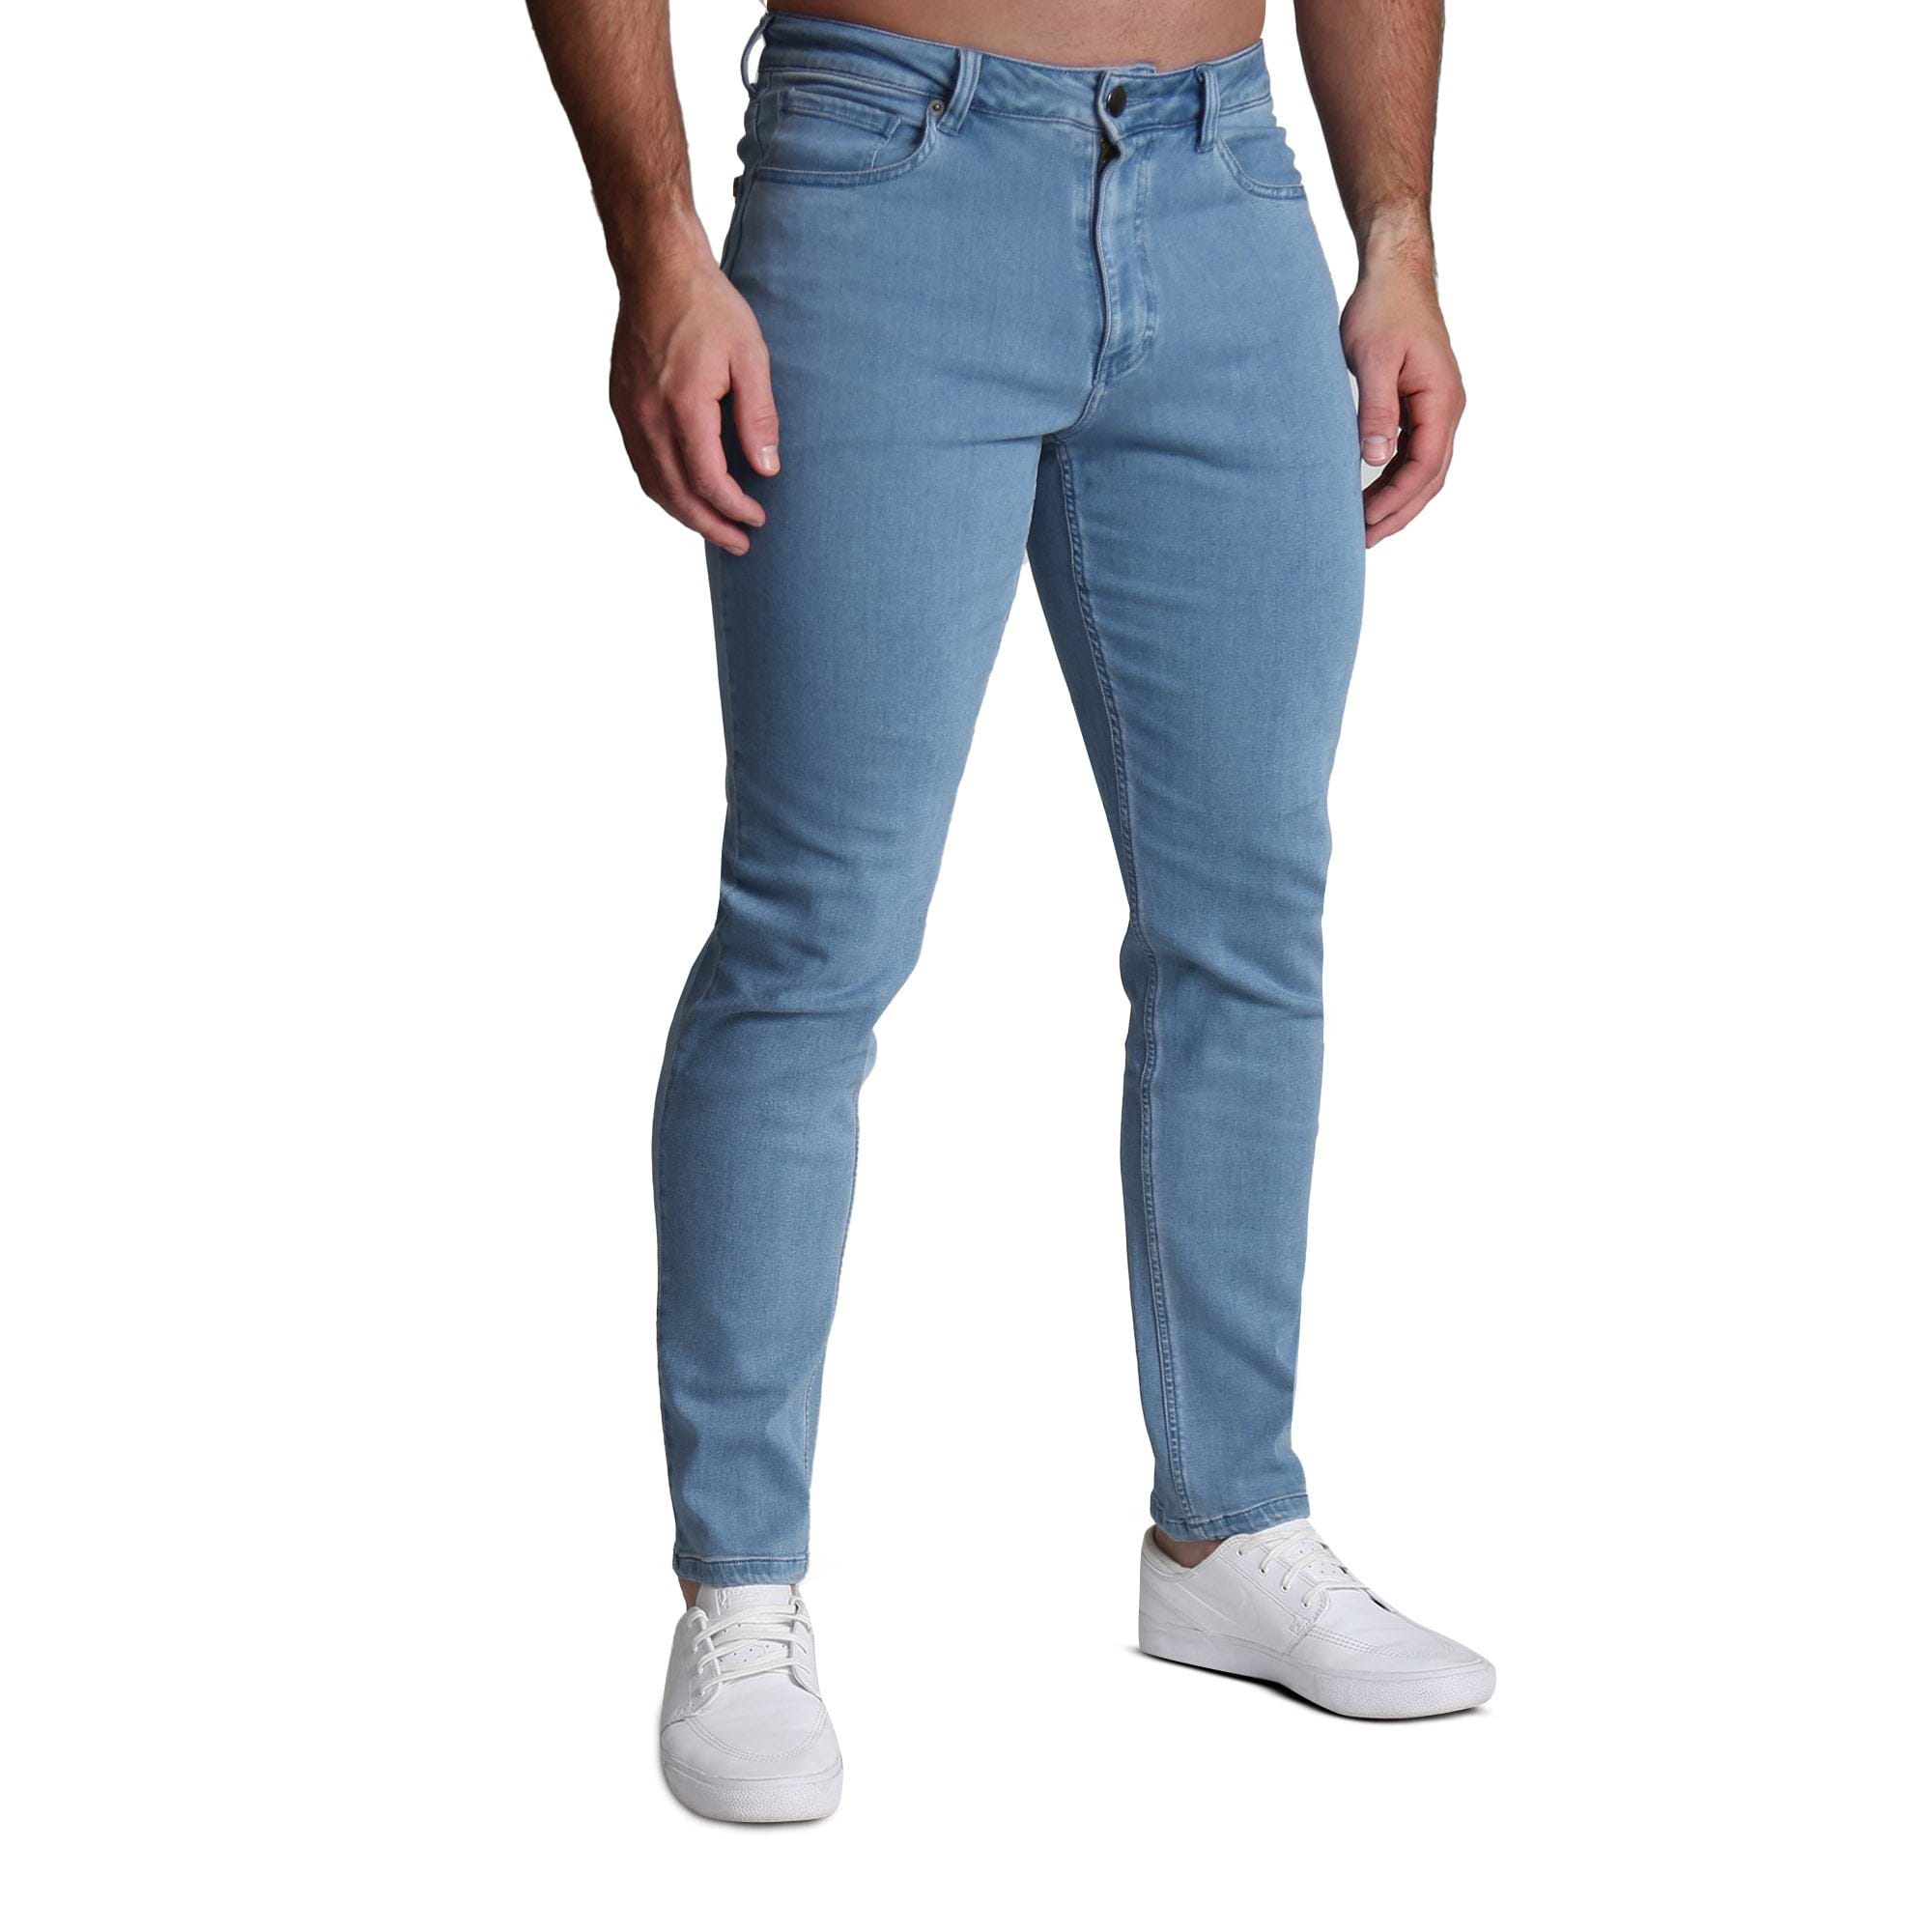 Men's Stretchy Jeans, Athletic Cut Jeans